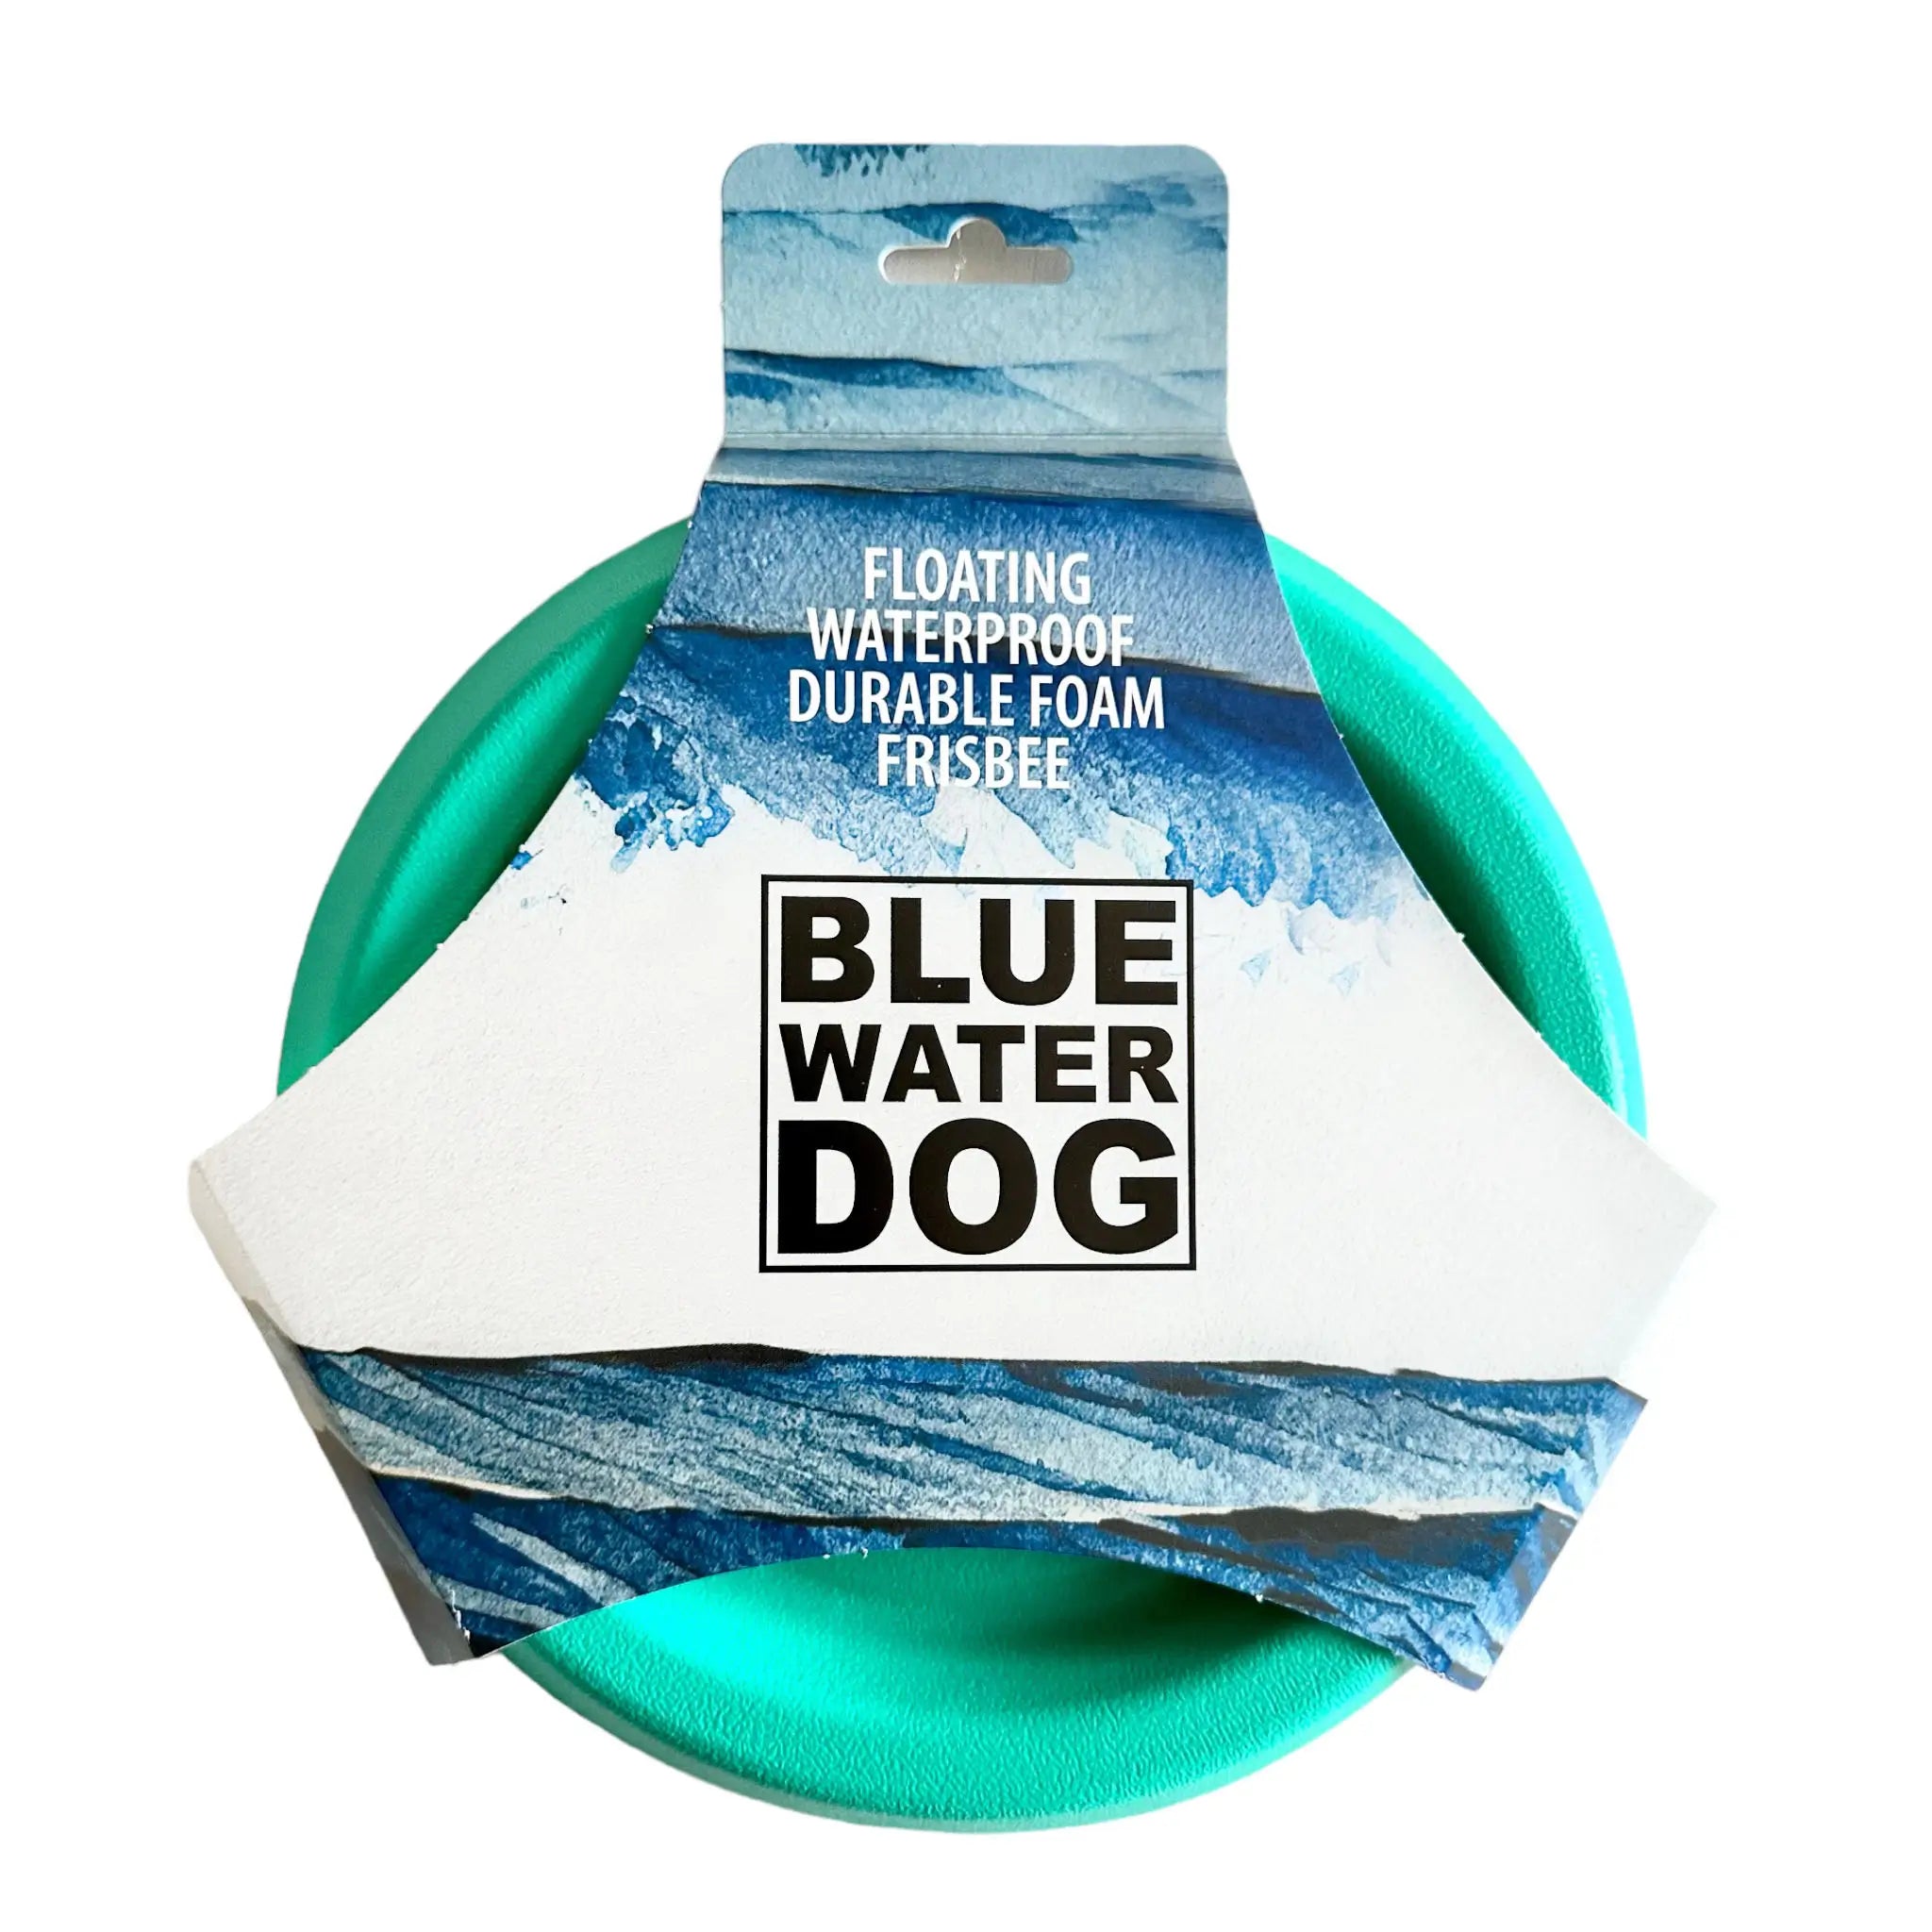 Teal dog frisbee in packaging.